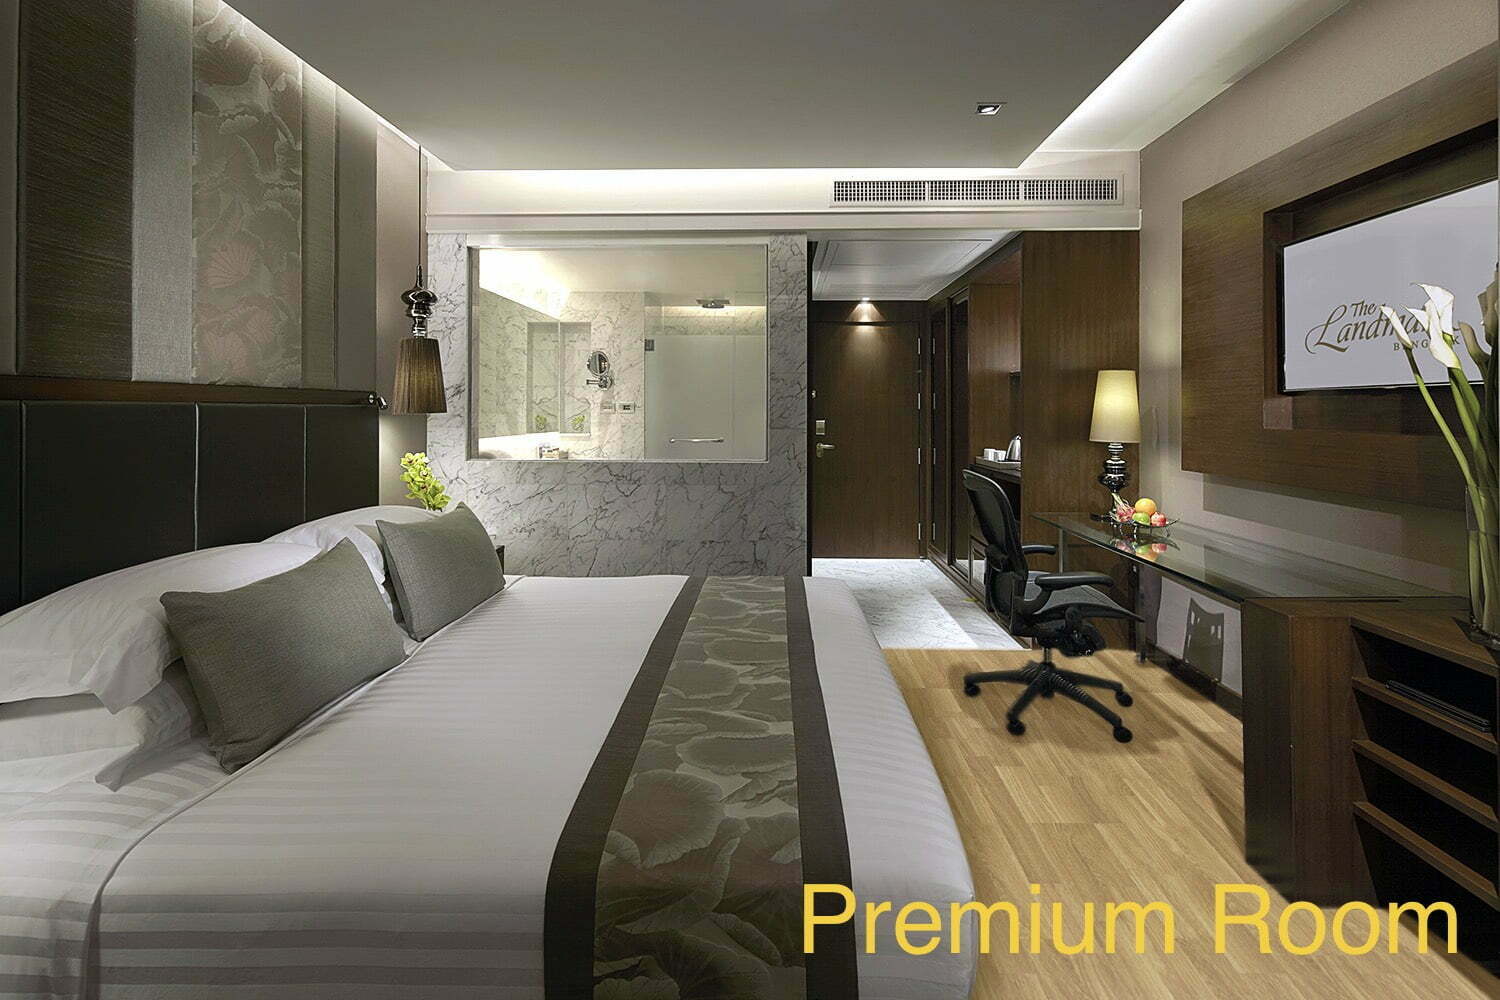 Luxury 5 star hotel Premium Room